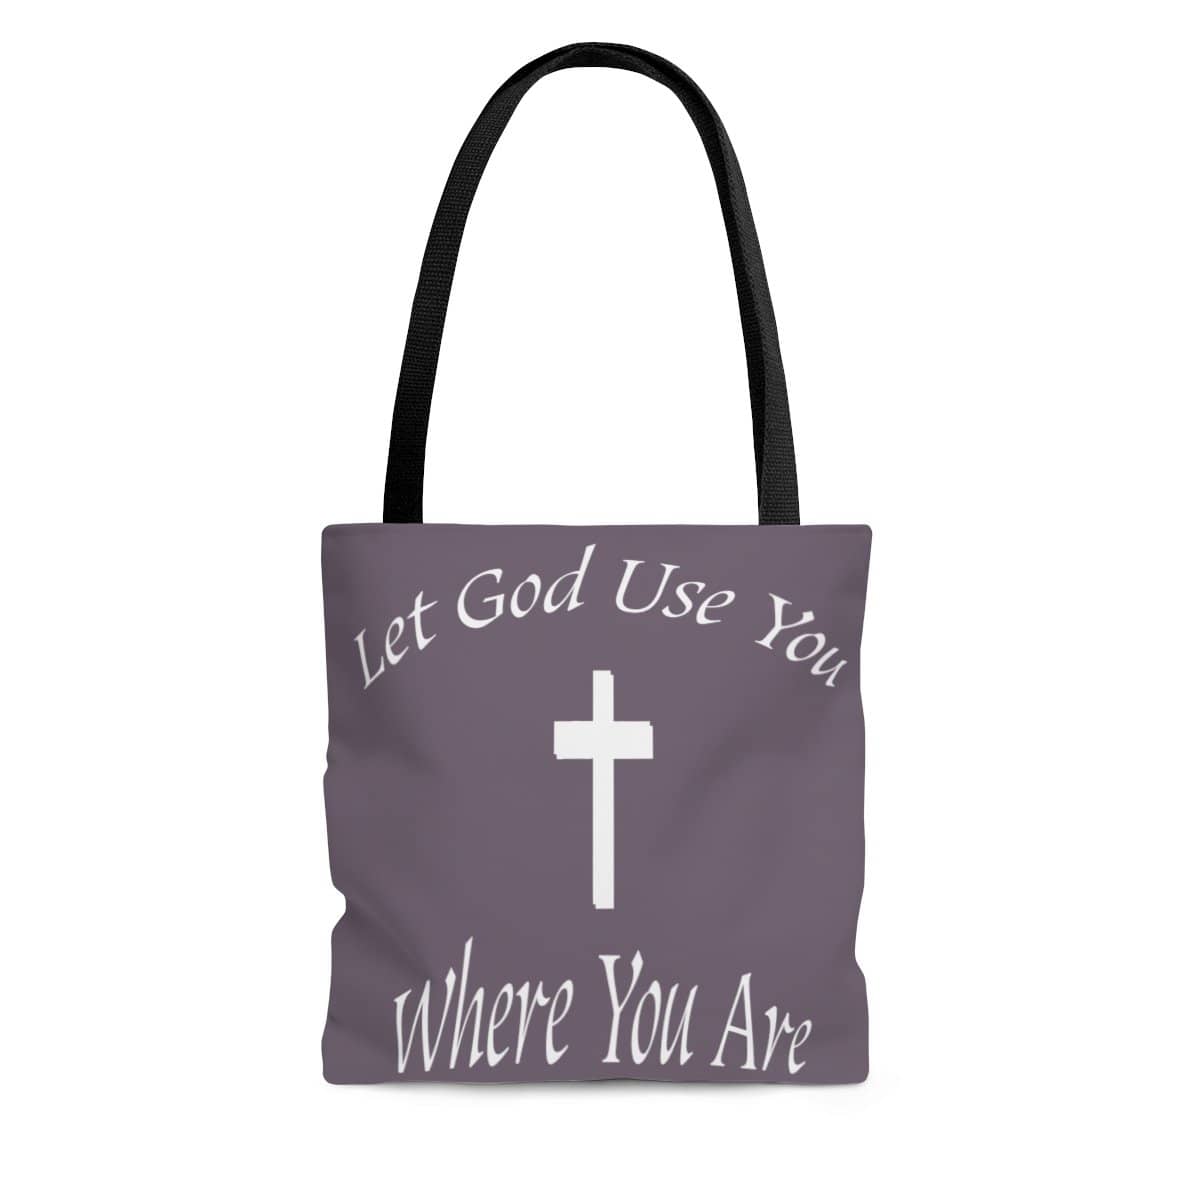 AOP Tote Bag "Let God Use You" in 3 Sizes (3931393949790)